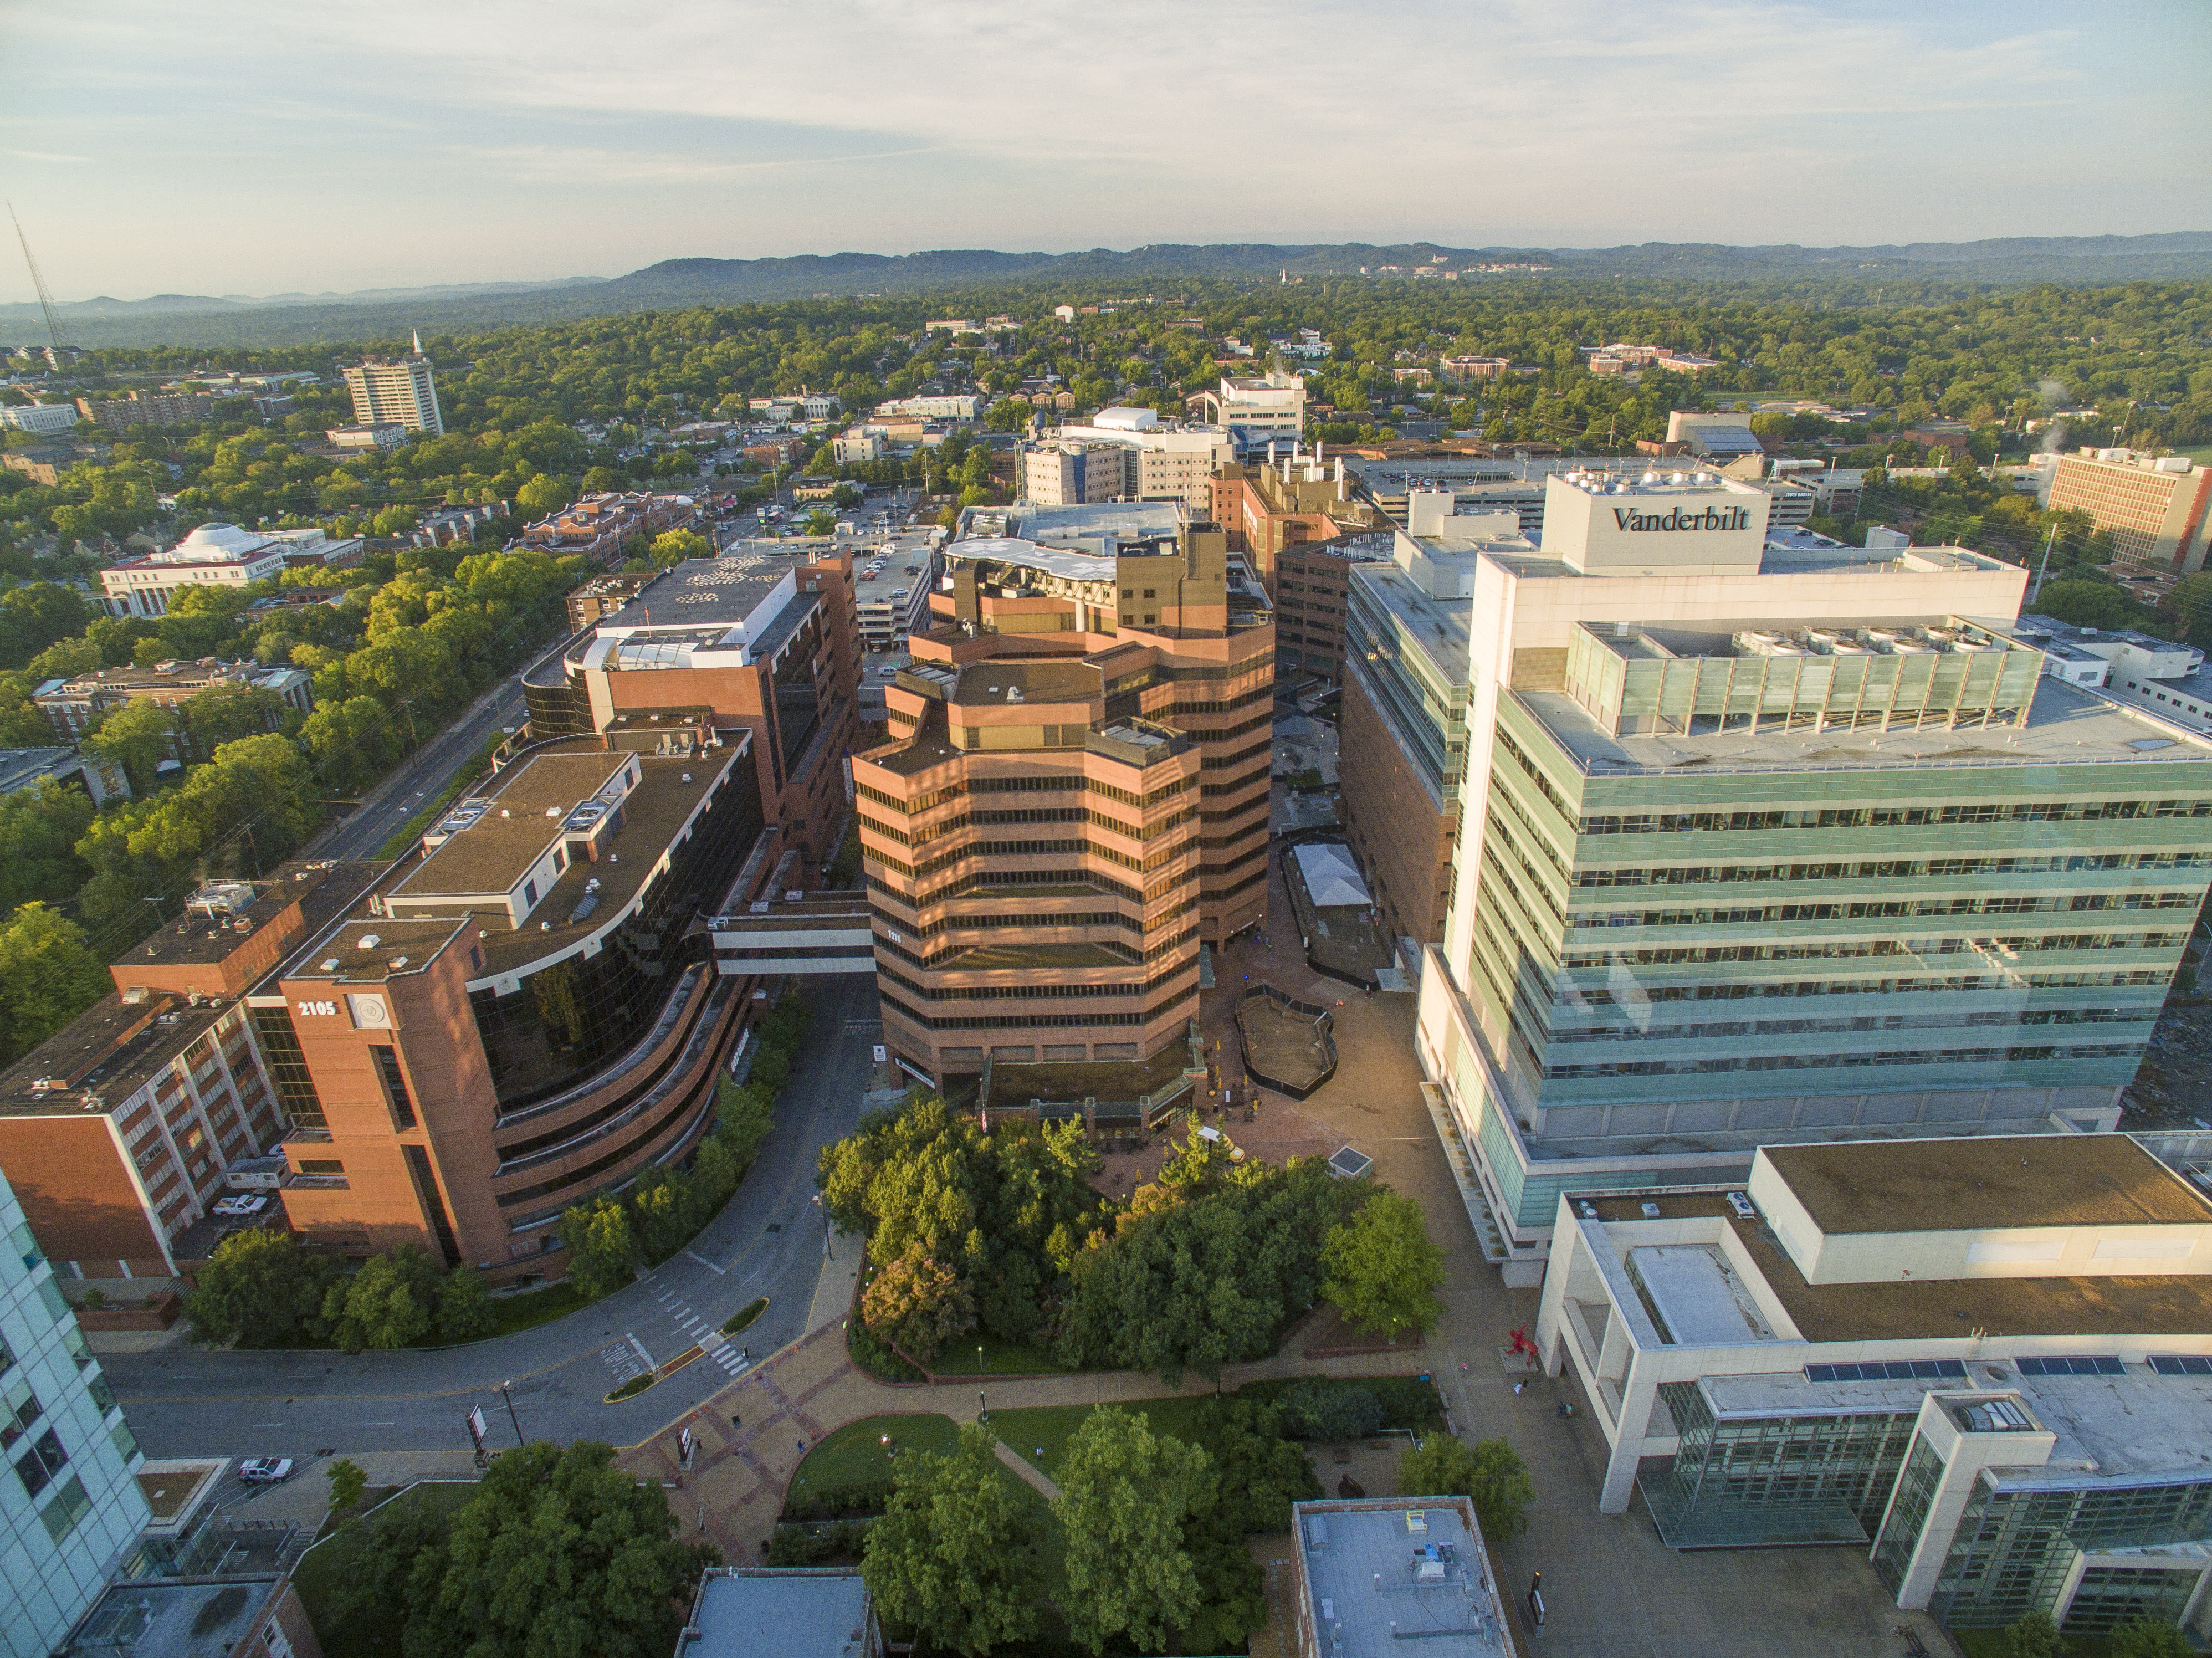 Vanderbilt University, Medical Center reach $1B milestone together in research funding